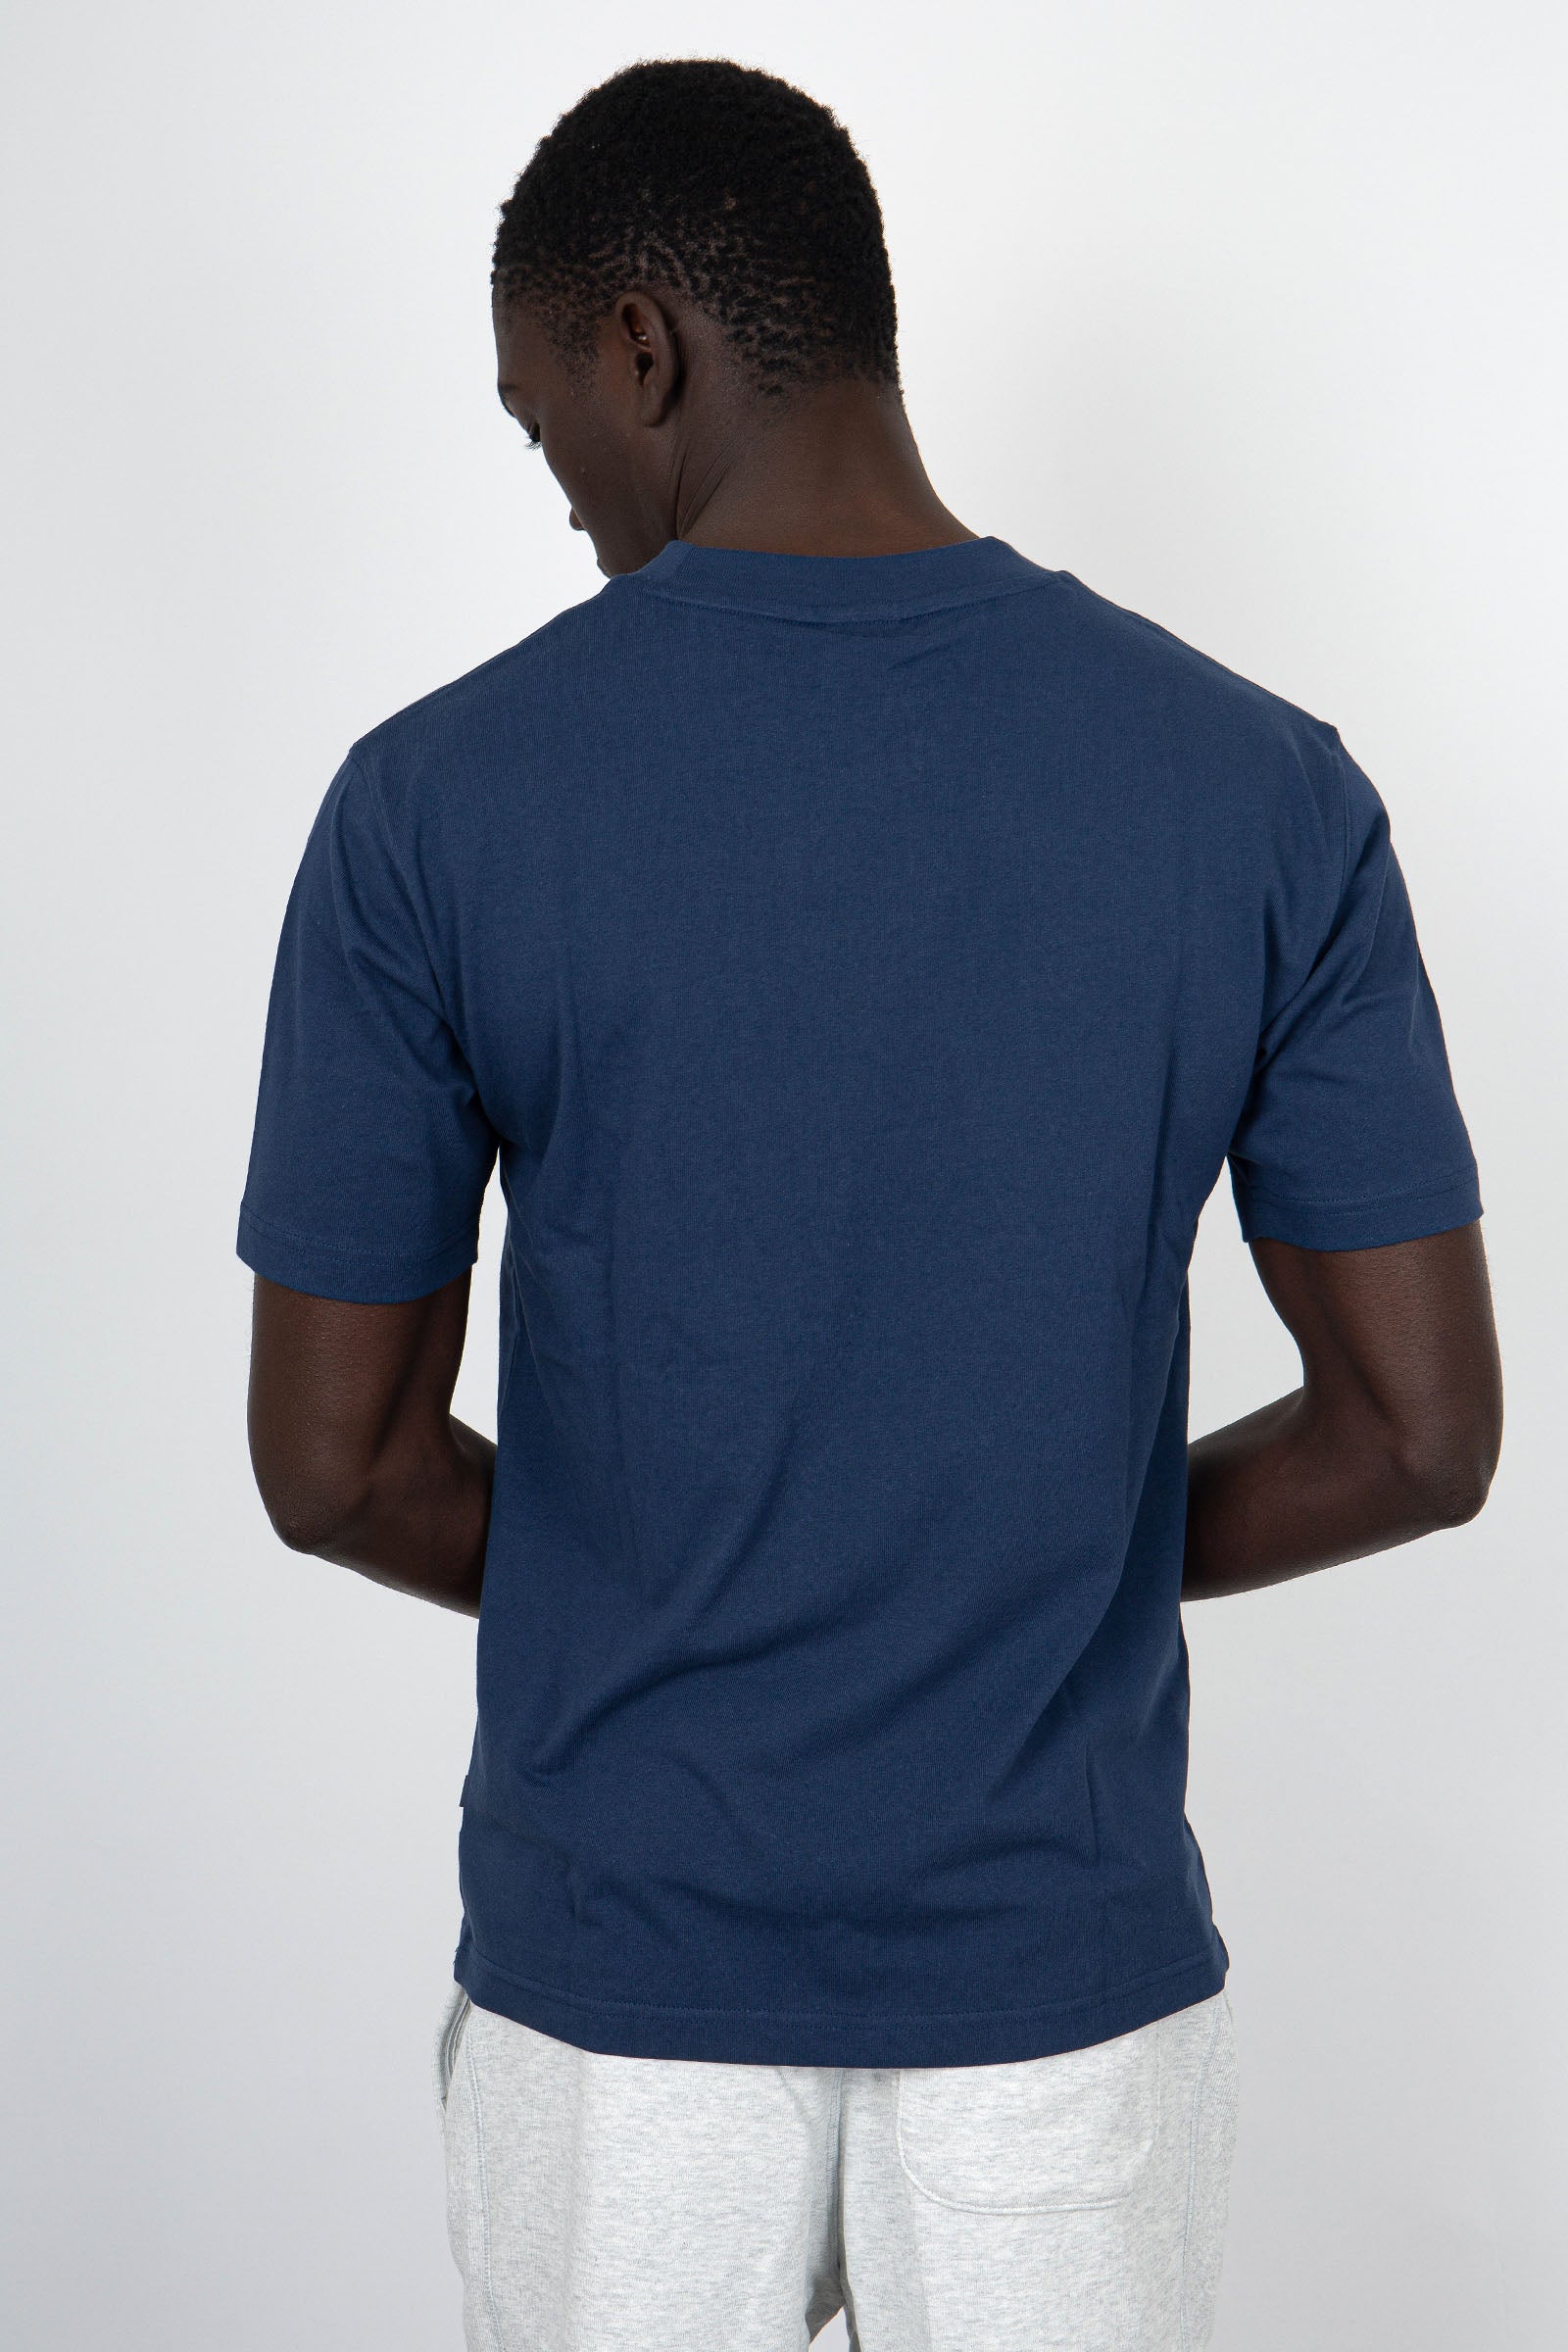 New Balance T-shirt NB Athletics Basketball Style Cotton Blue - 4